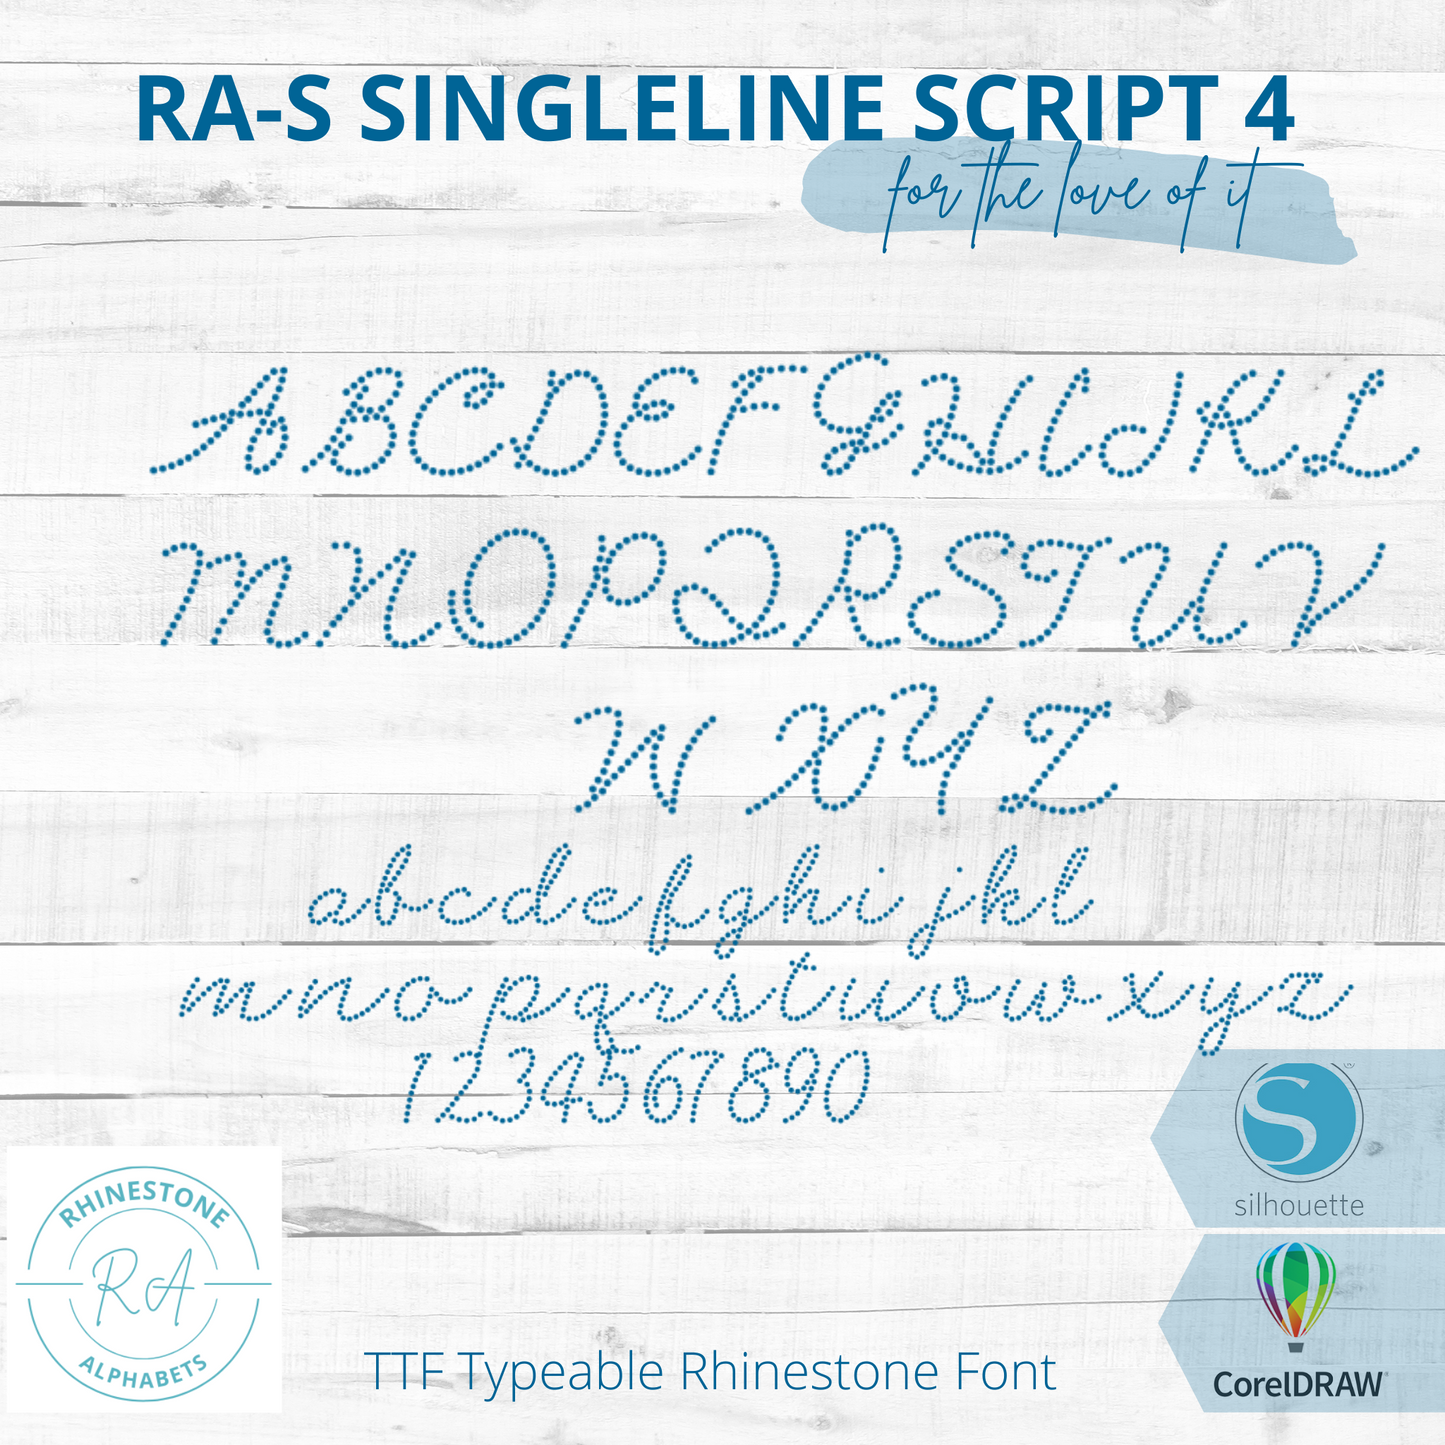 RA-S Script 4 - RhinestoneAlphabets